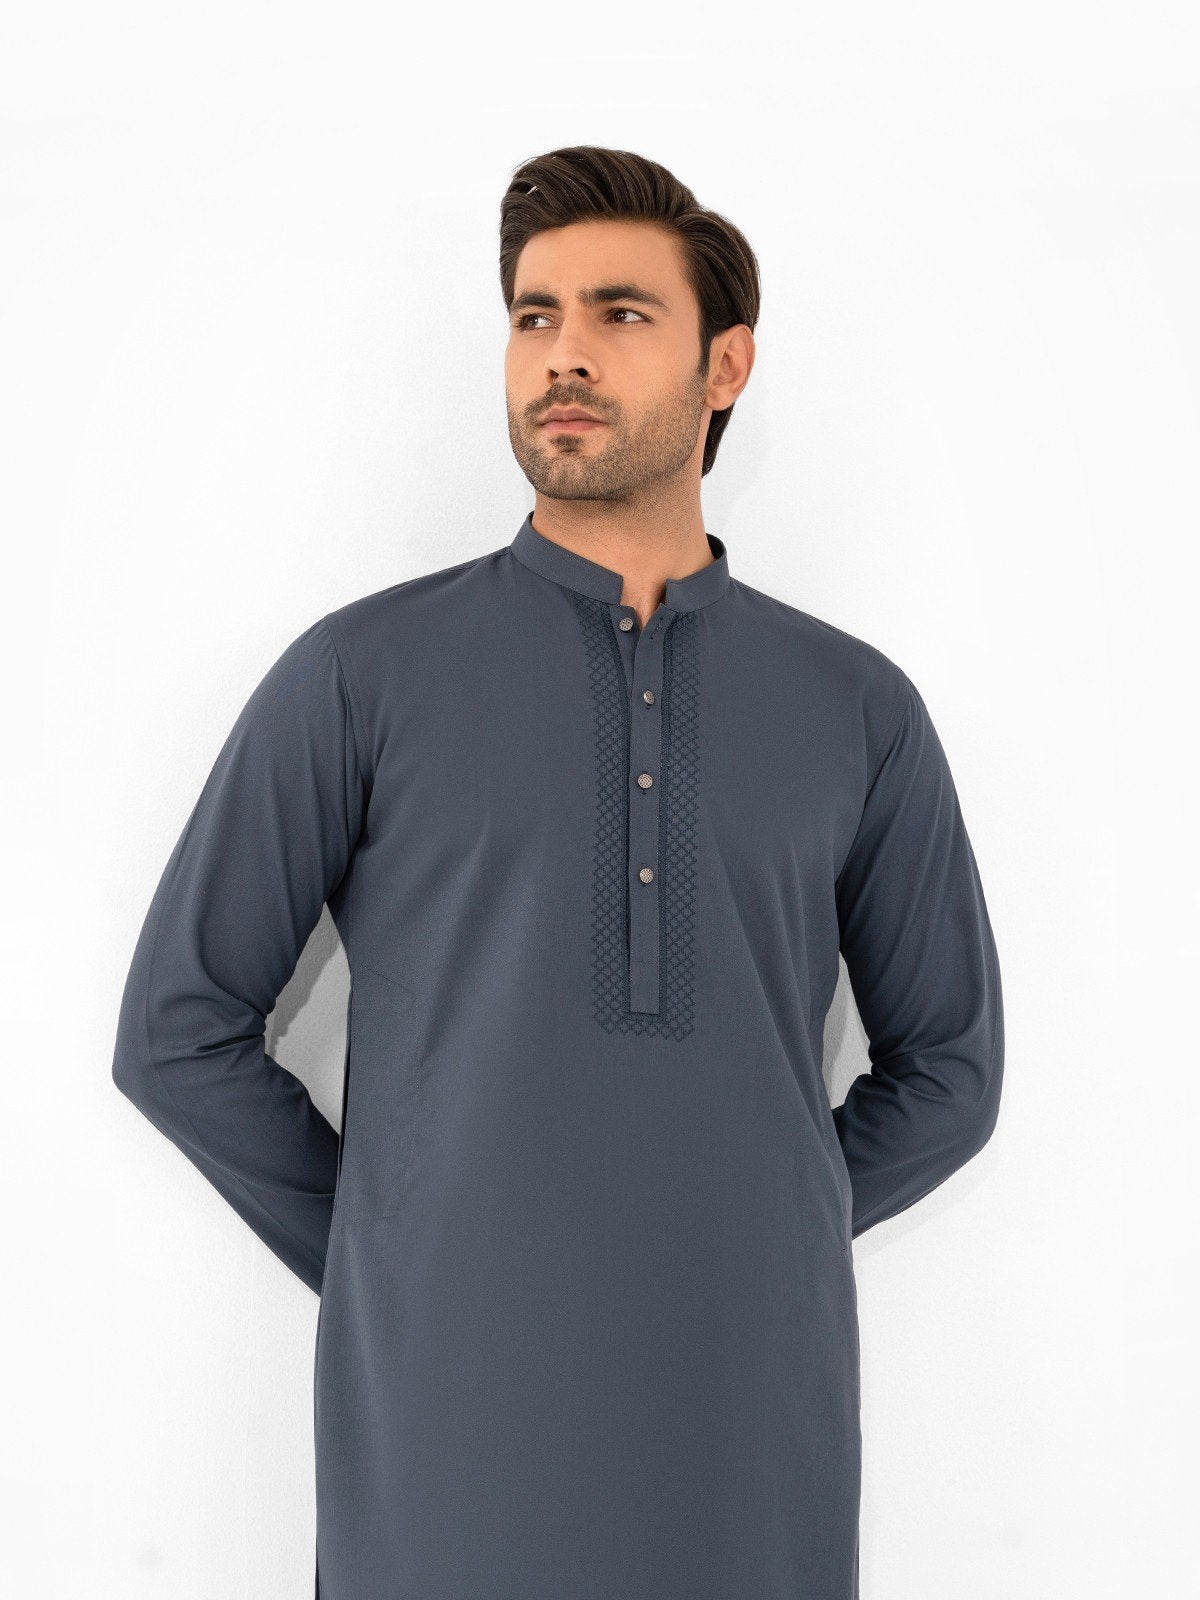 Pakistani clothing brands that ship to USA - SHK-1144